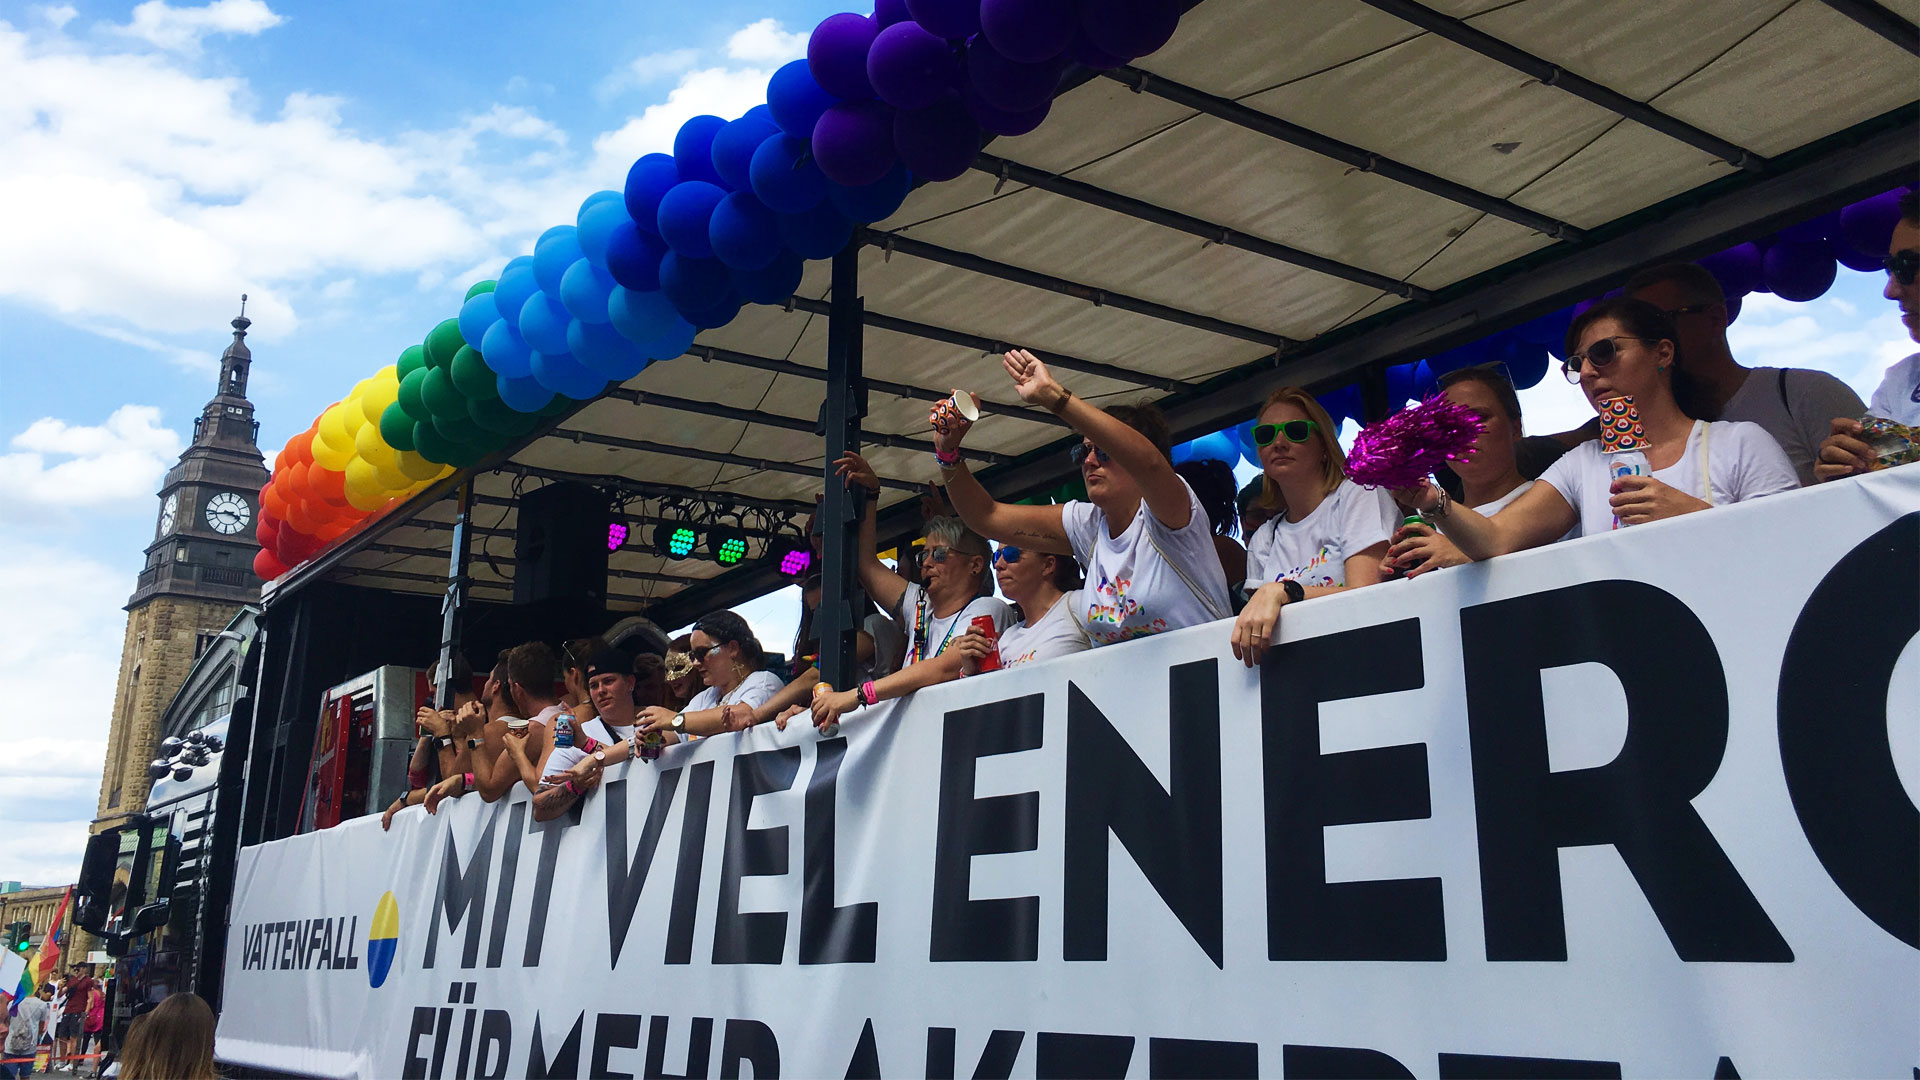 Vattenfal eployees at Pride parade in Berlin